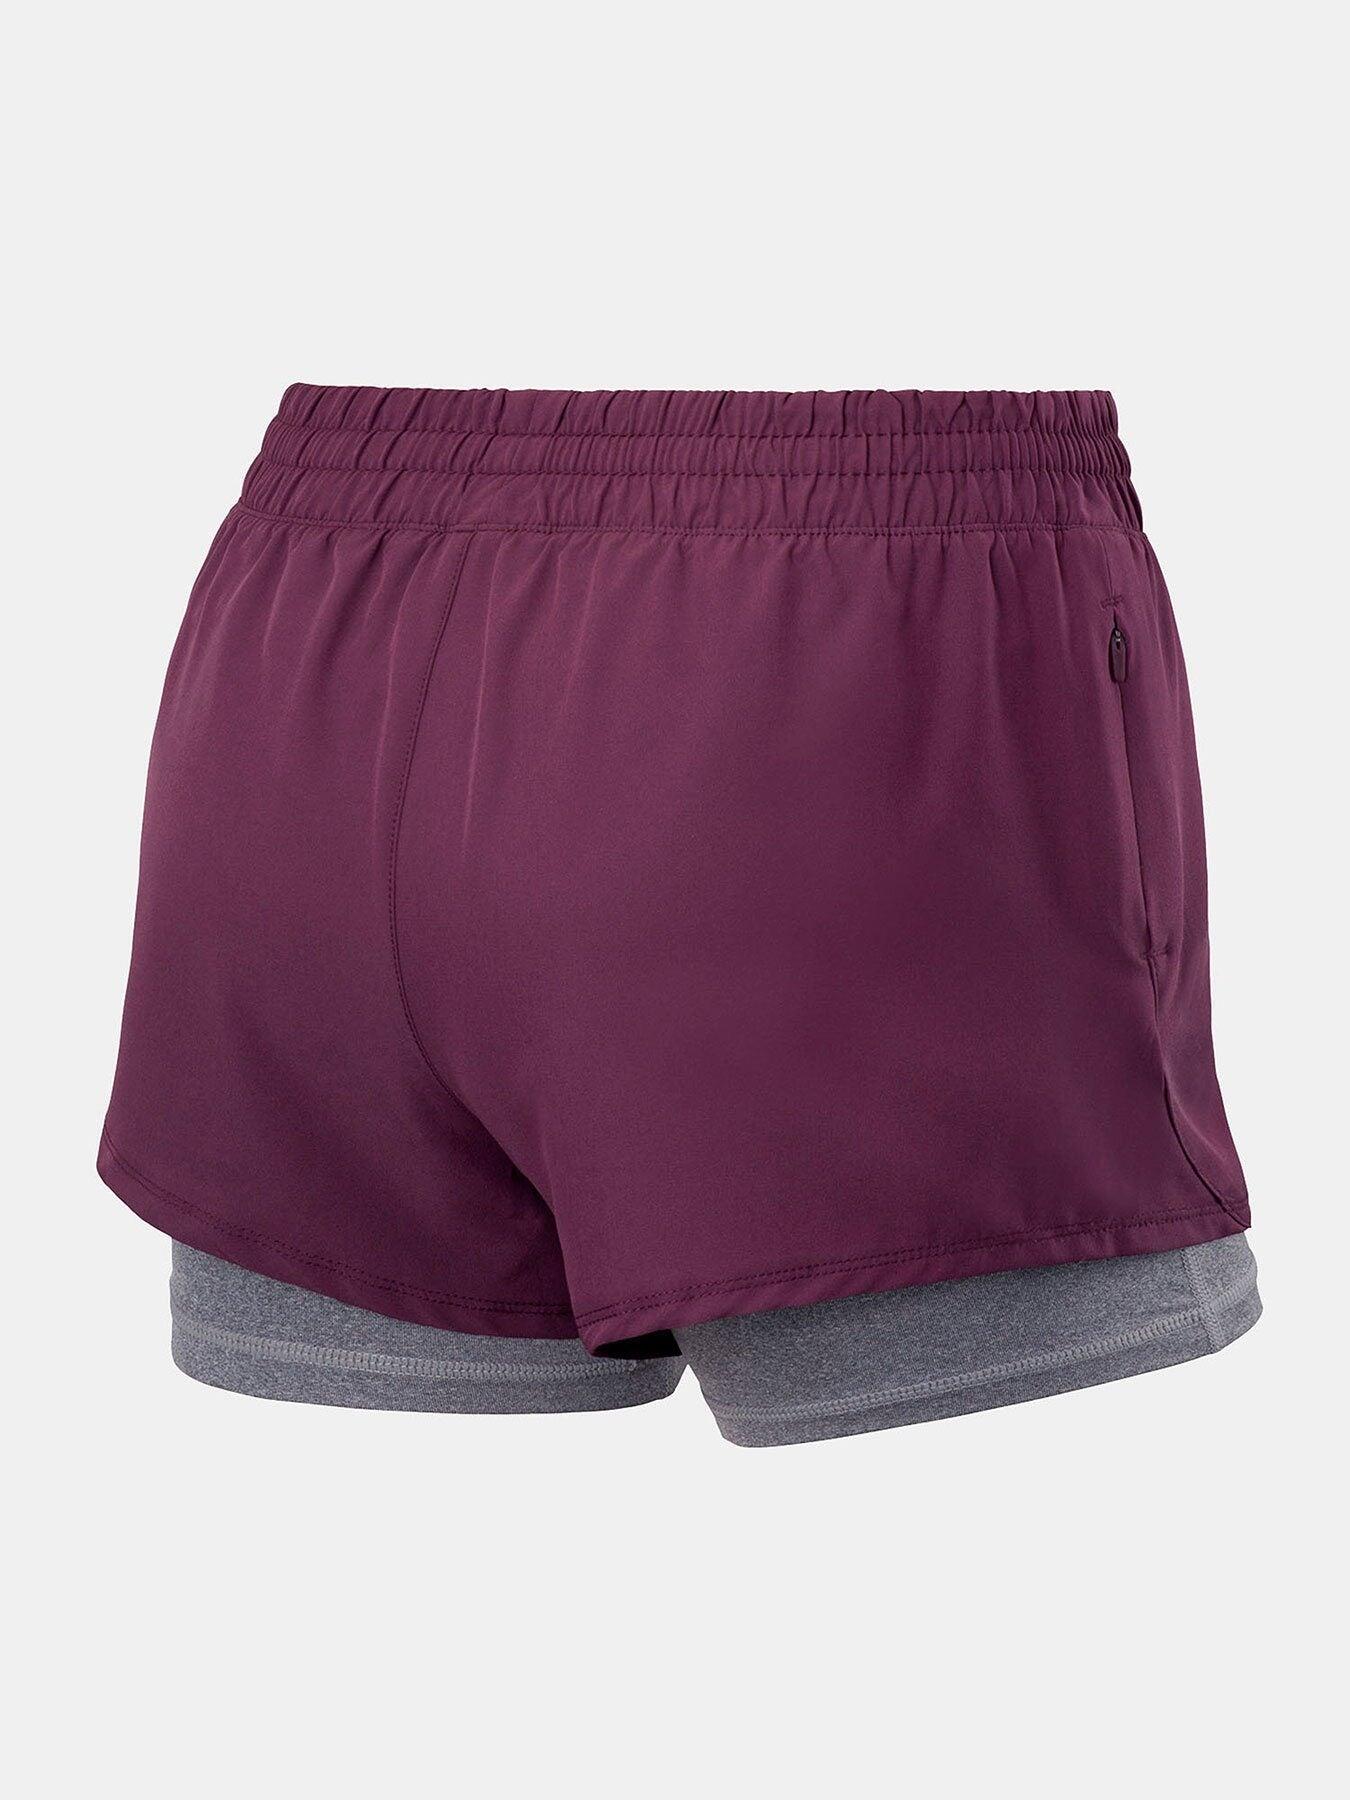 Women’s Perform 2-in-1 Shorts with Zip Pocket - Prune/Mid Grey 2/5